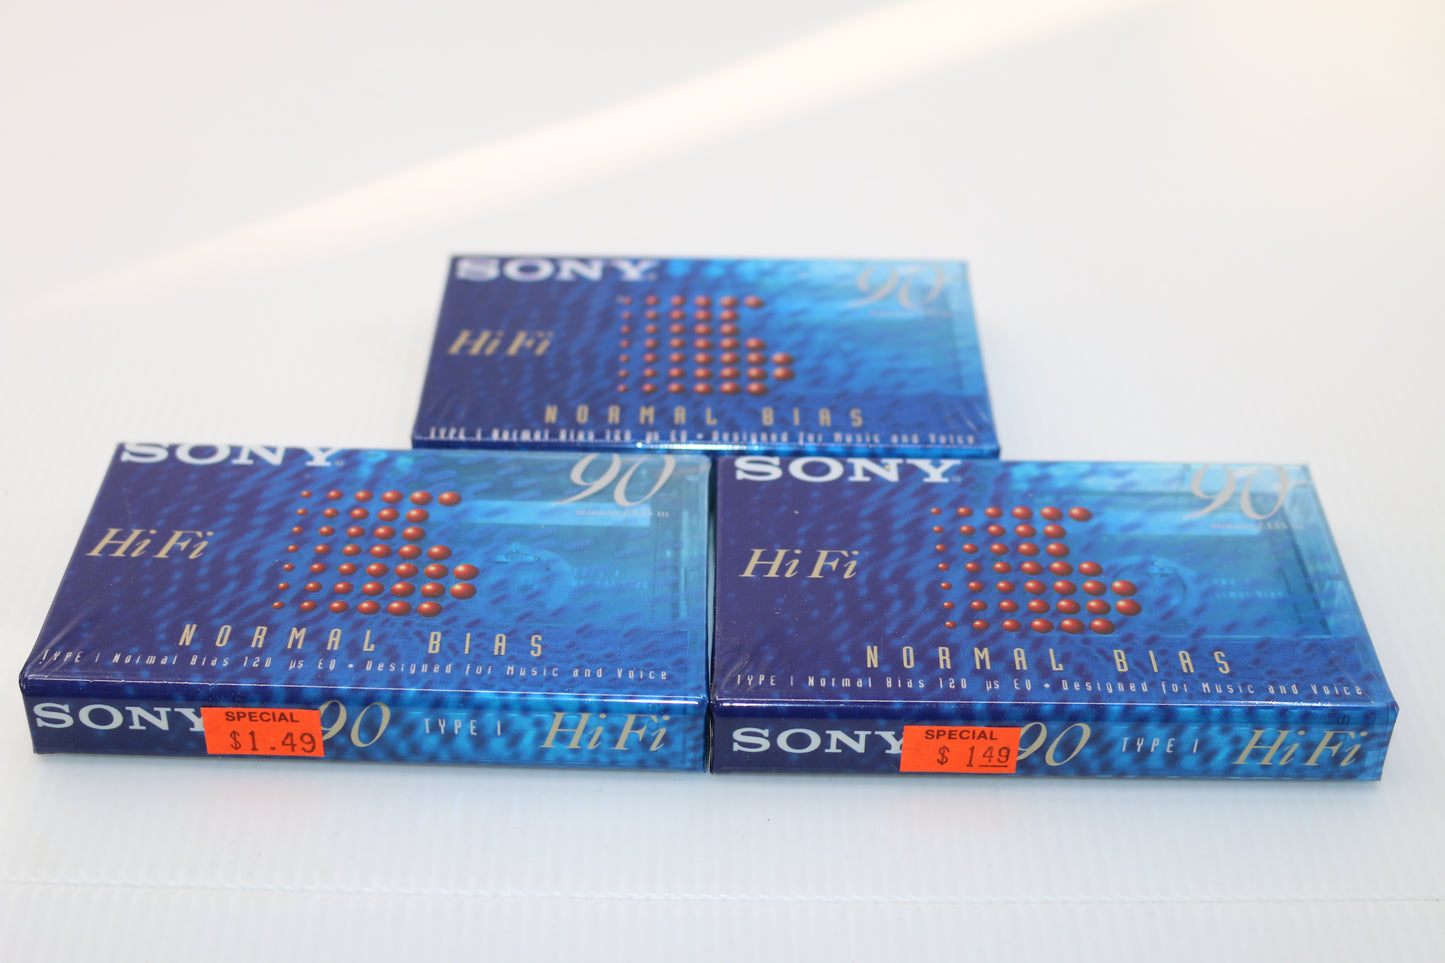 3 Sony HiFi 90 Min Normal Bias Blank Audio Cassette Tape C-90HFB Sealed